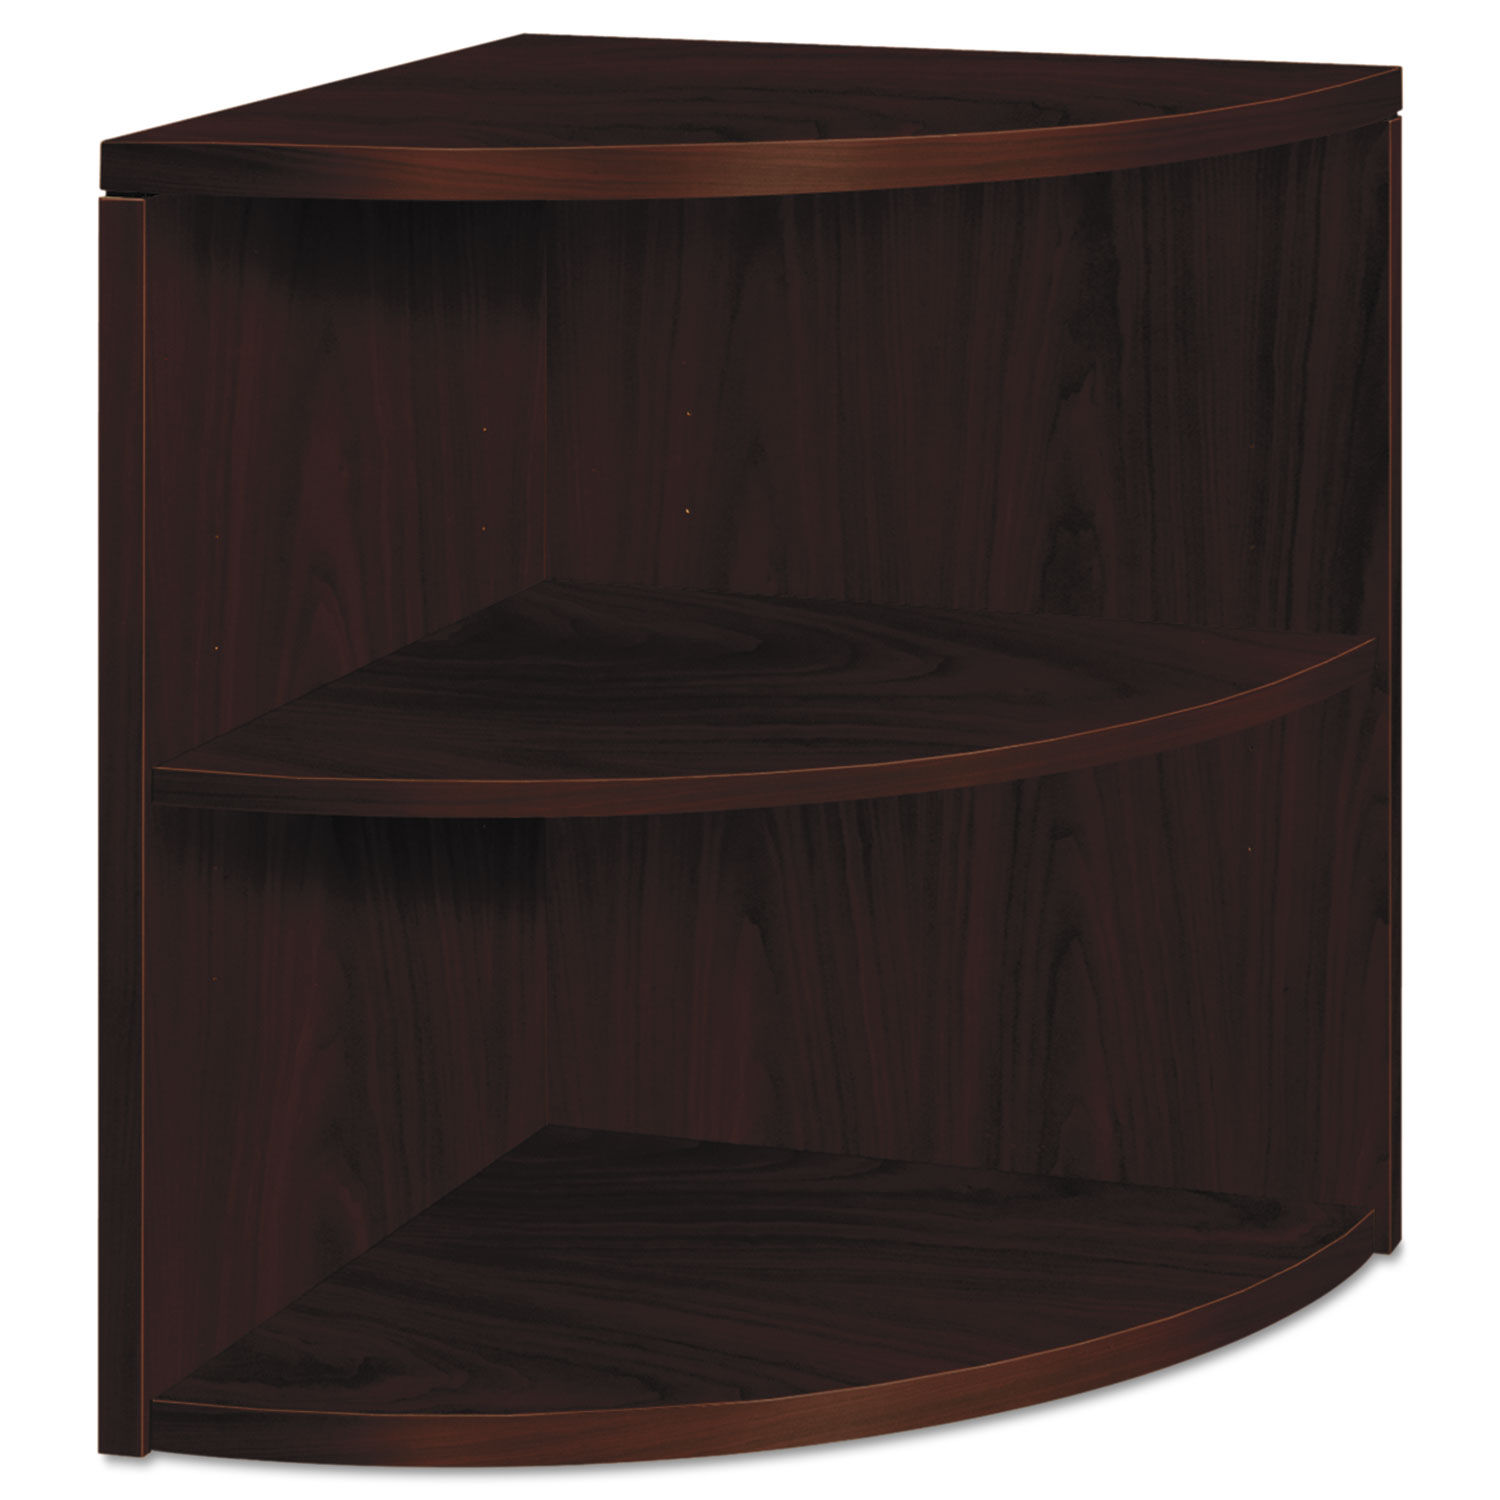 10500 Series Two-Shelf End Cap Bookshelf 24w x 24d x 29.5h, Mahogany